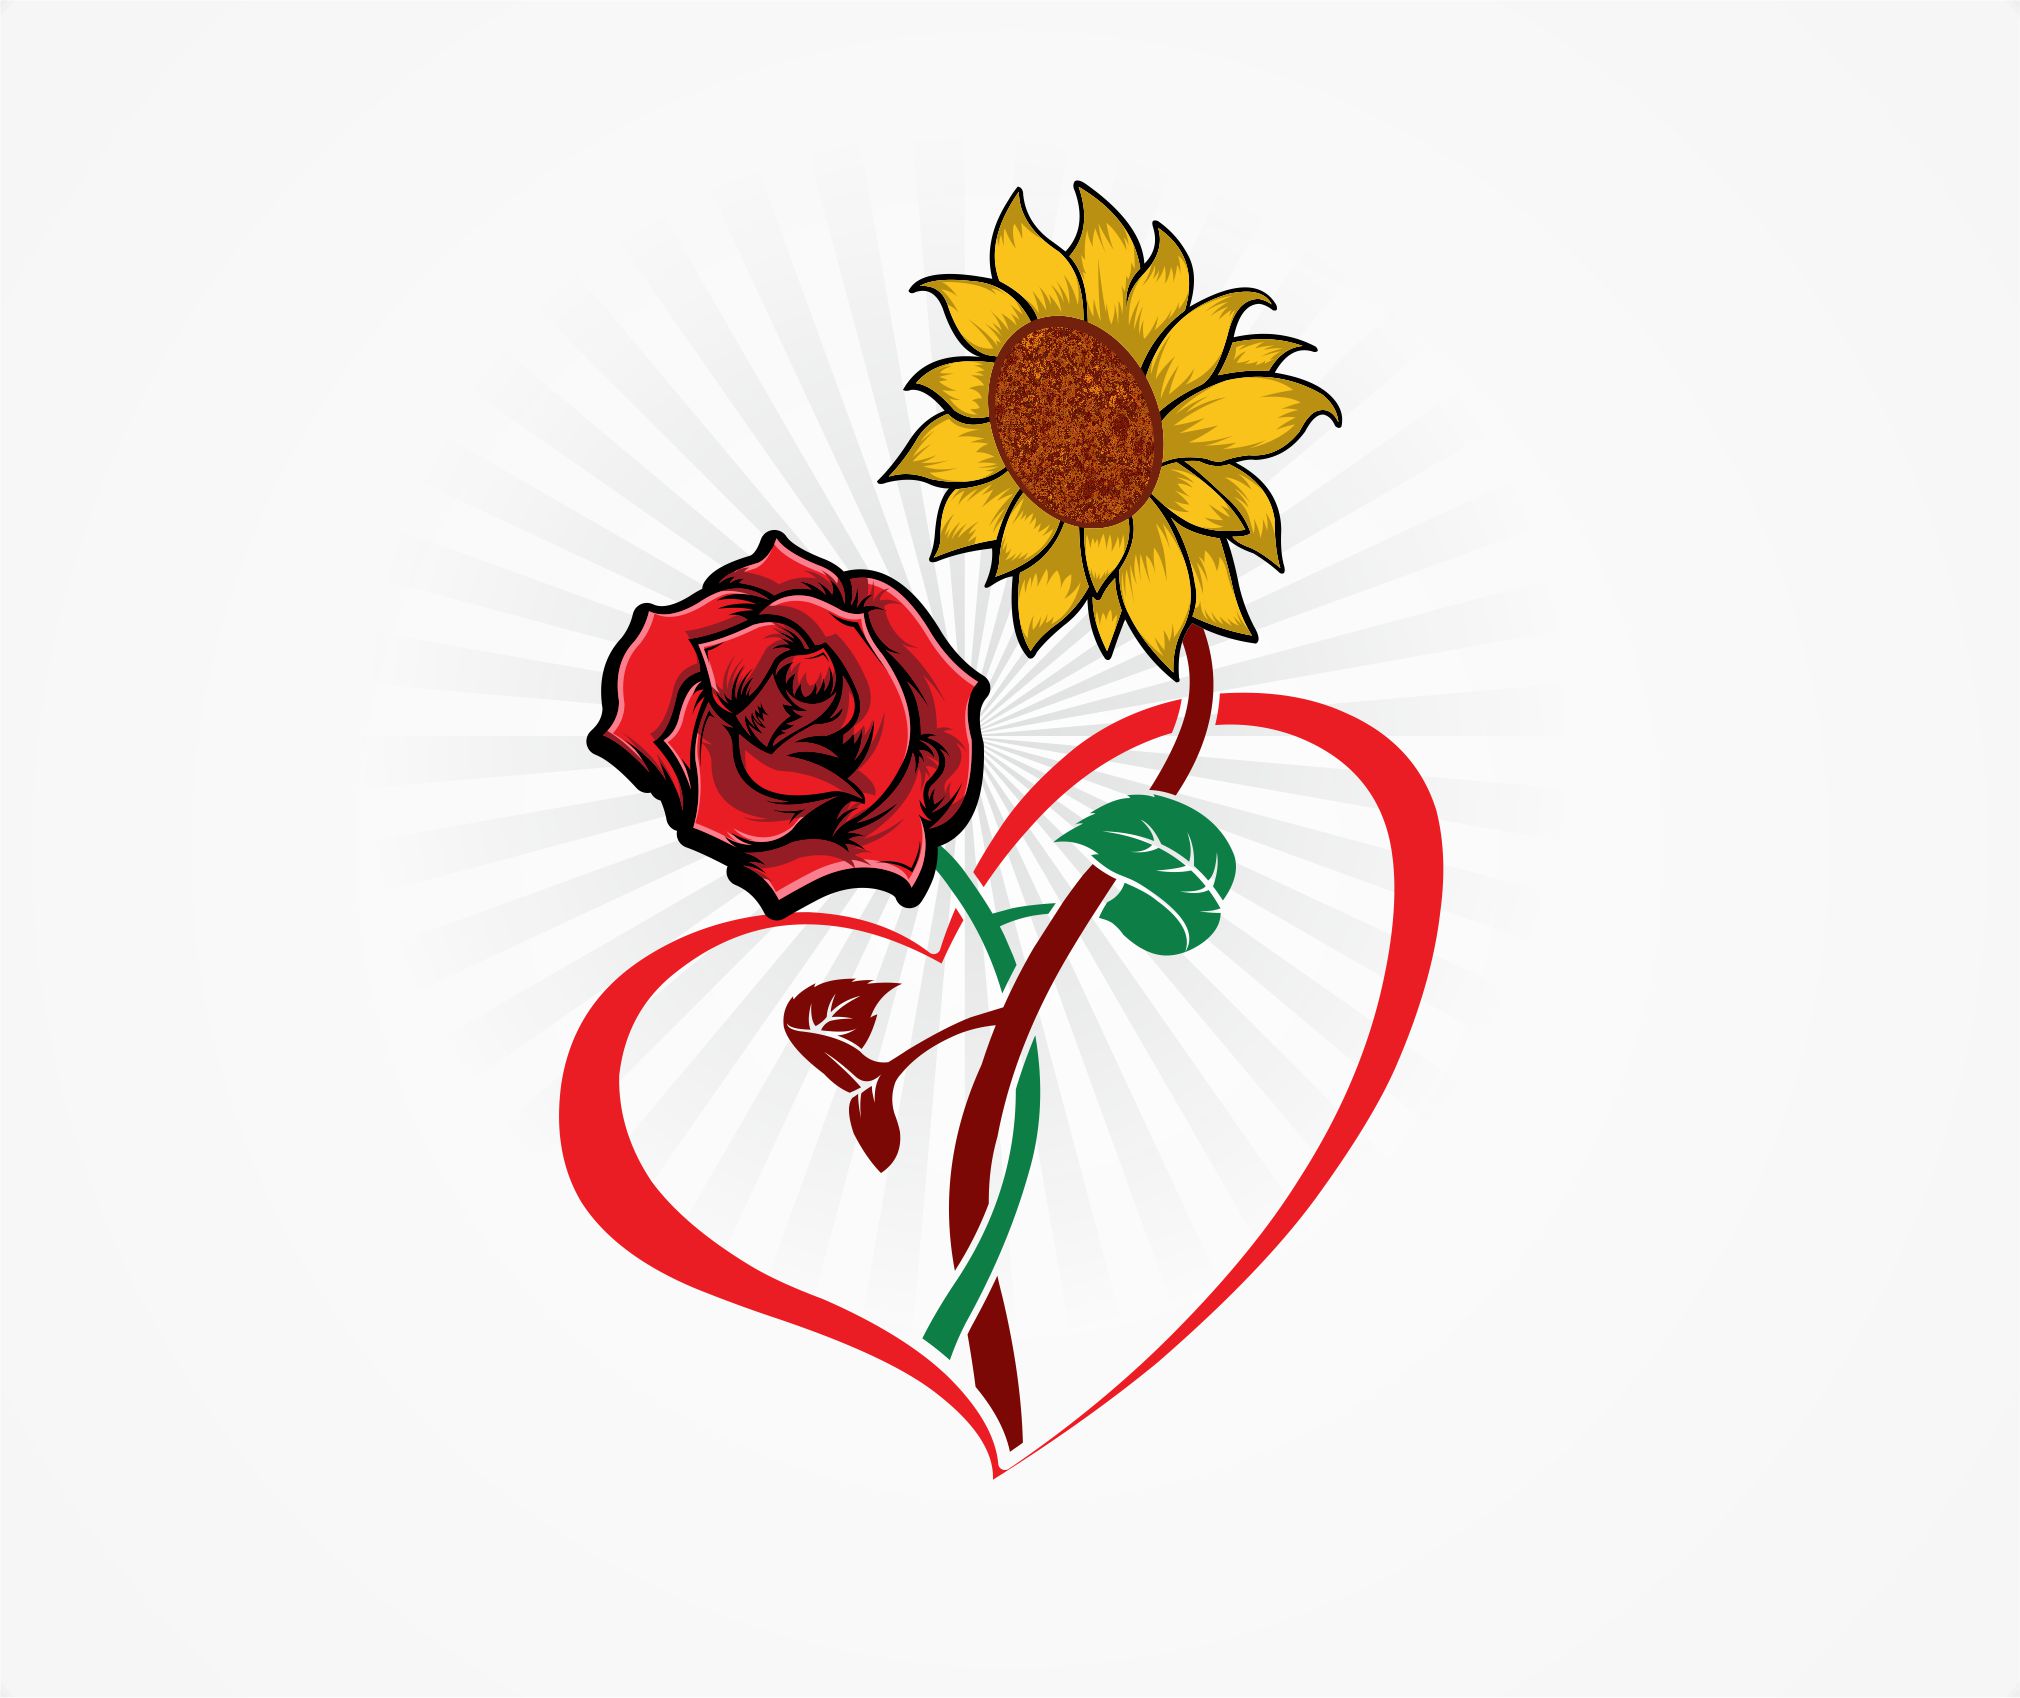 Logo Design entry 2239593 submitted by wongsanus to the Logo Design for Rose/sunflower run by jackm@jakks.net